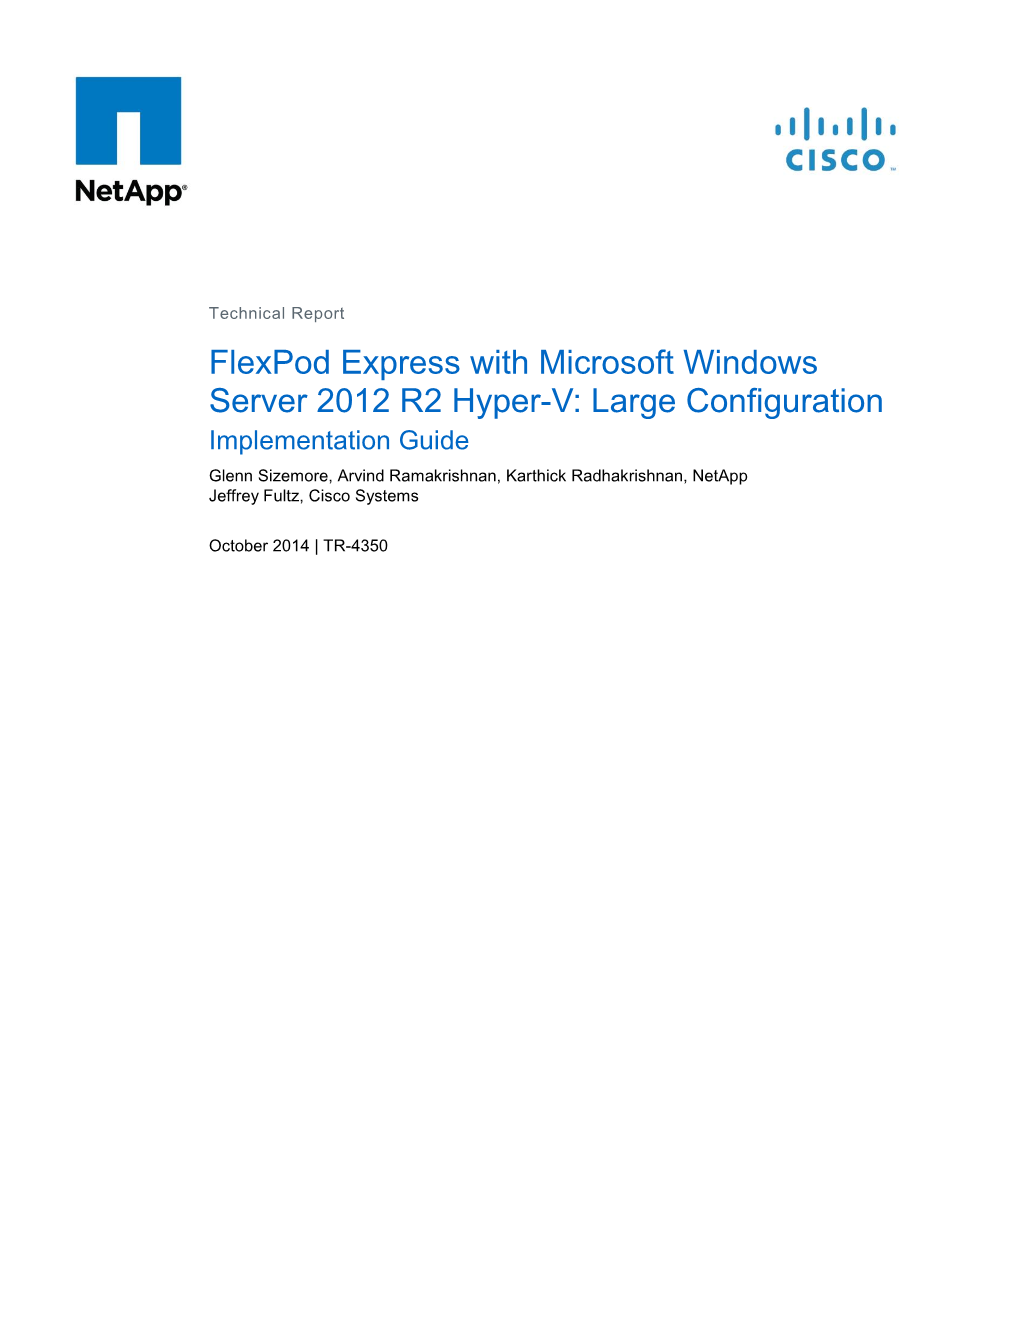 TR-4350: Flexpod Express with Microsoft Windows Server 2012 R2